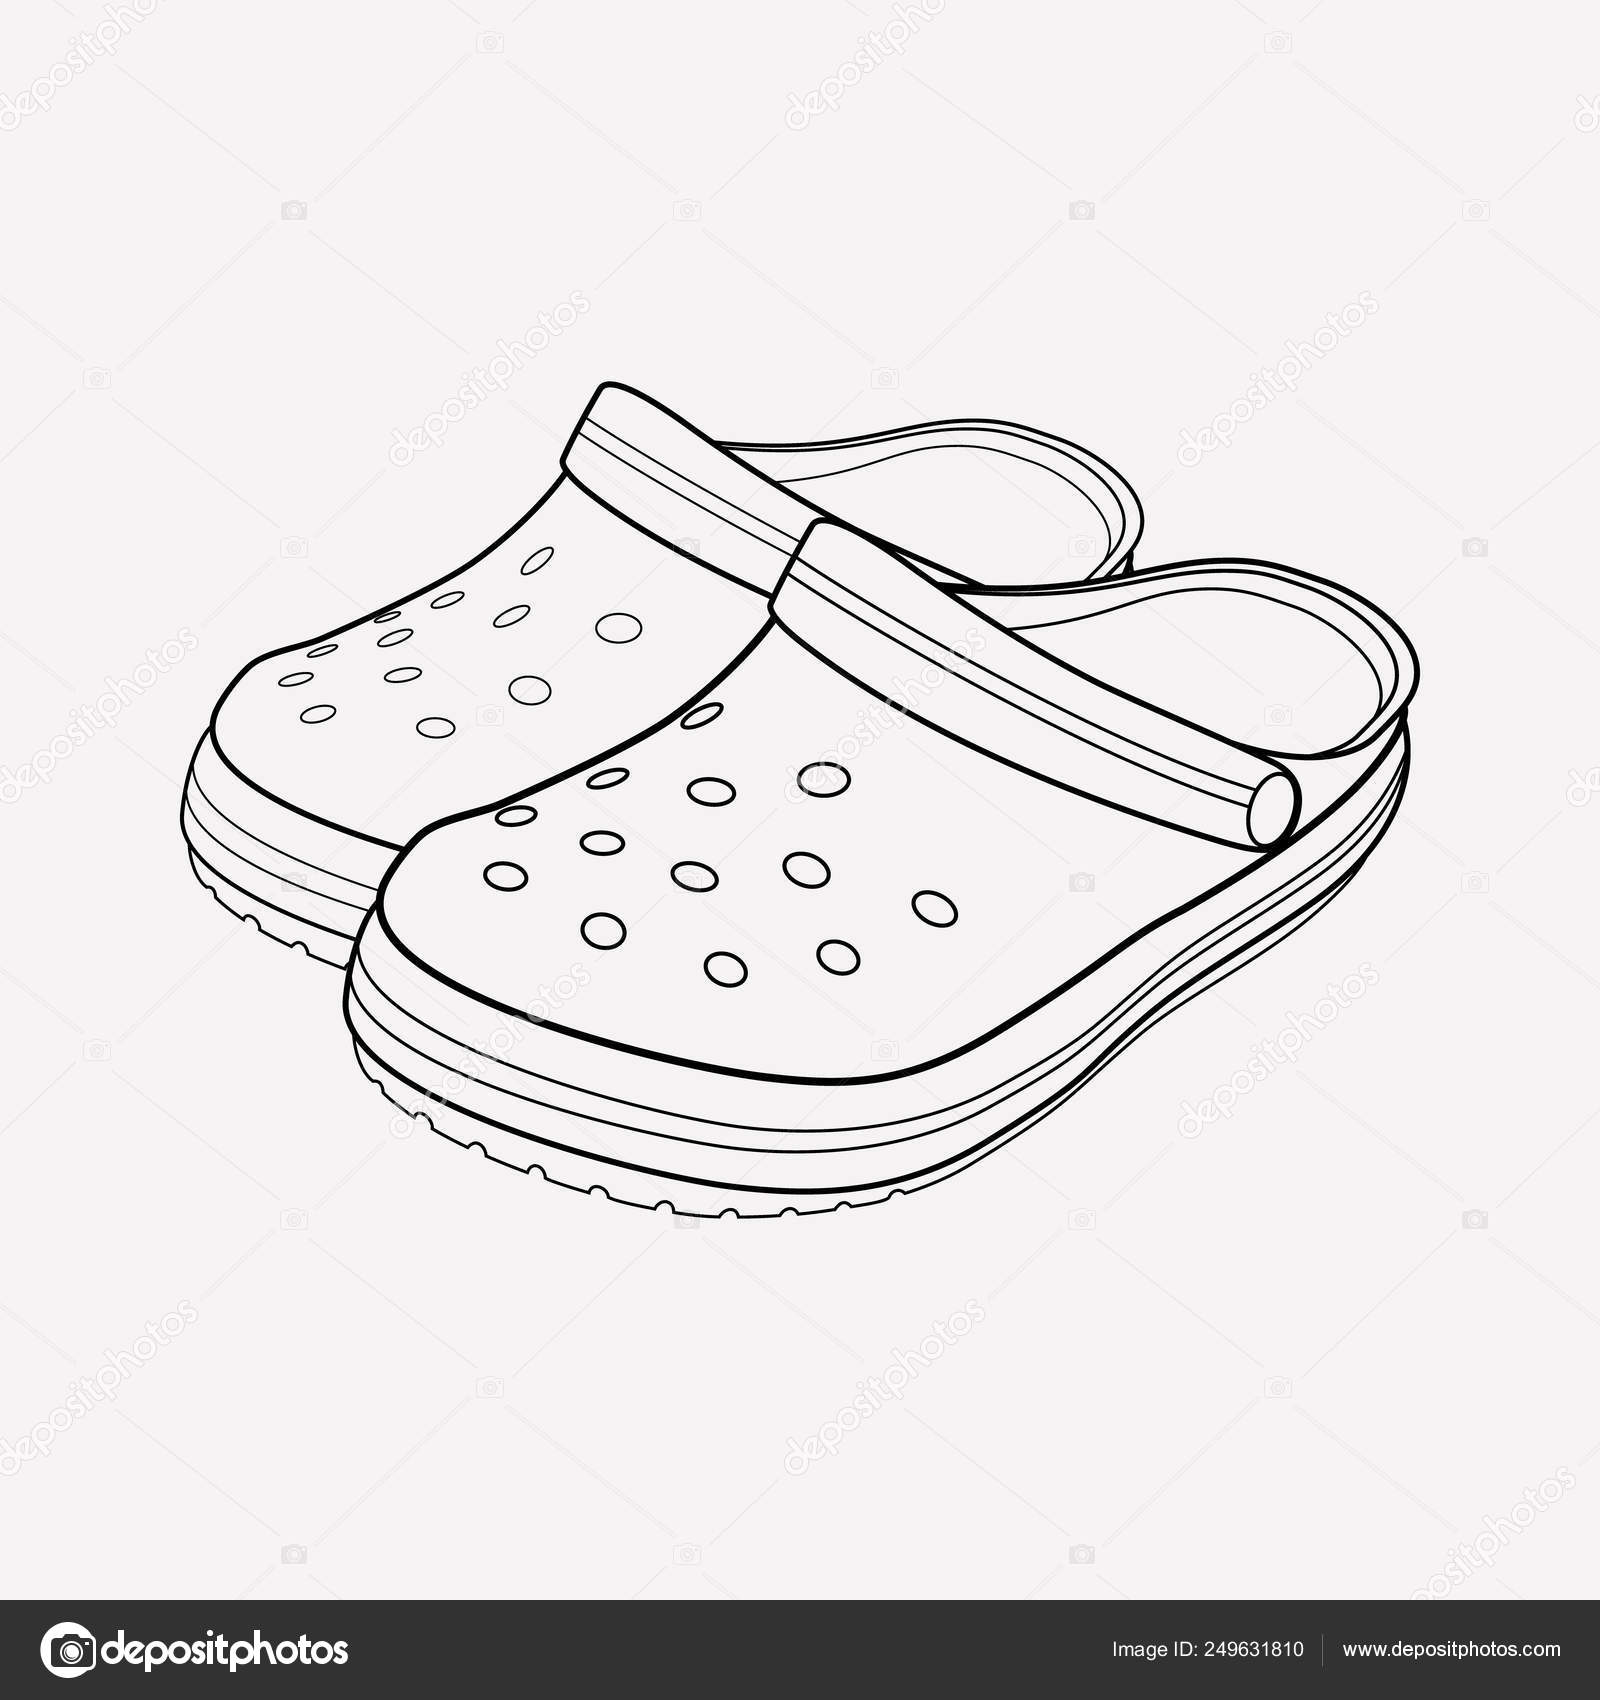 Crocs shoes imágenes de stock de arte vectorial | Depositphotos